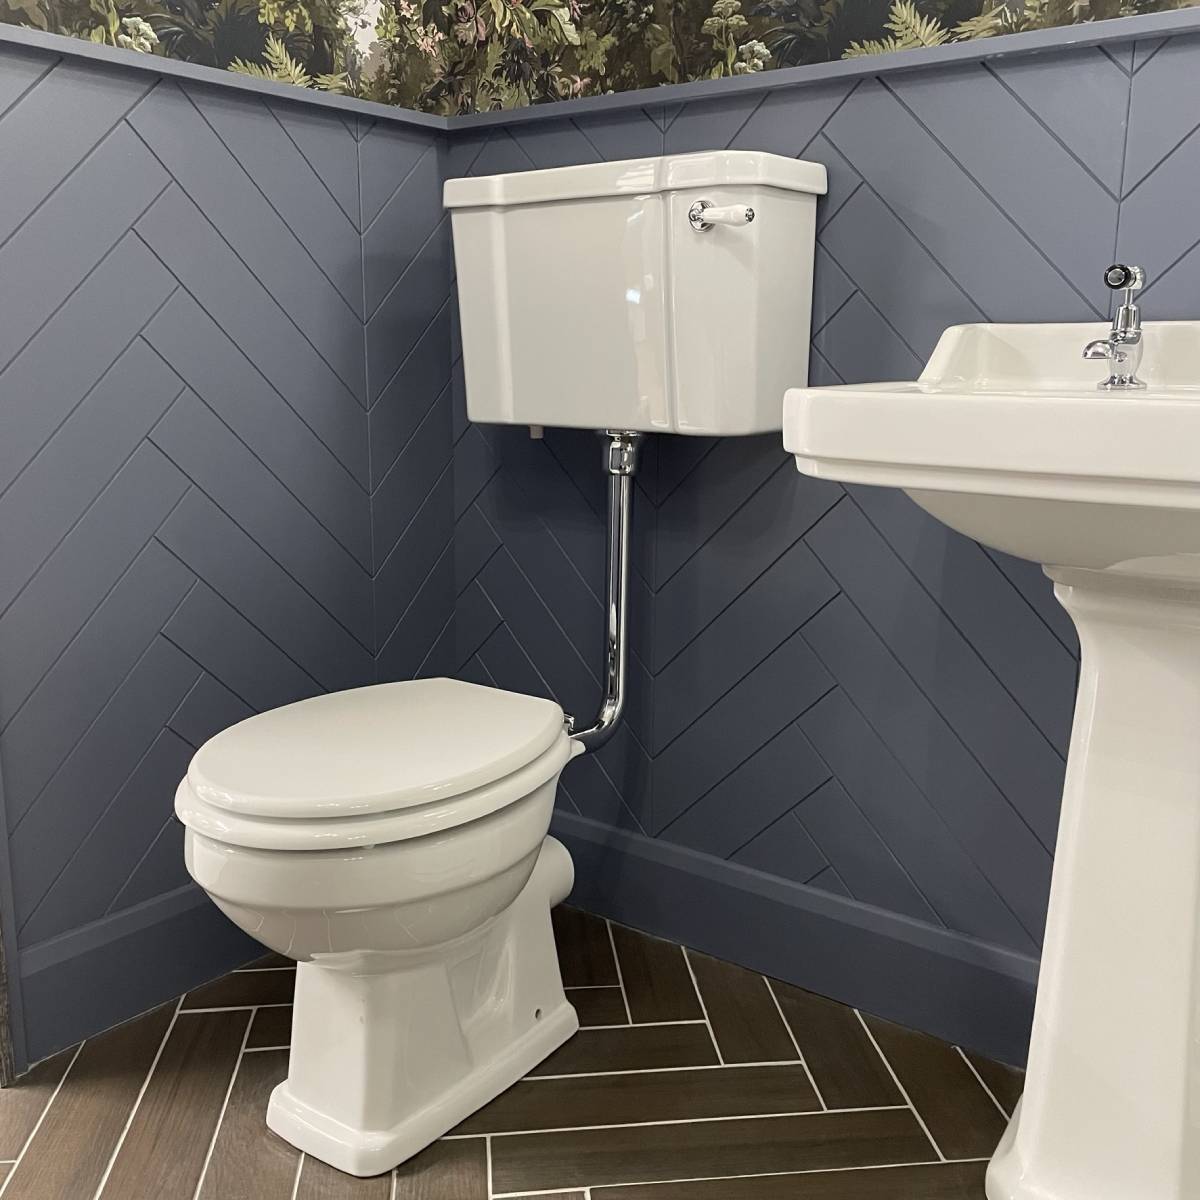 Ari Design London Low Level Toilet & Soft Close Seat